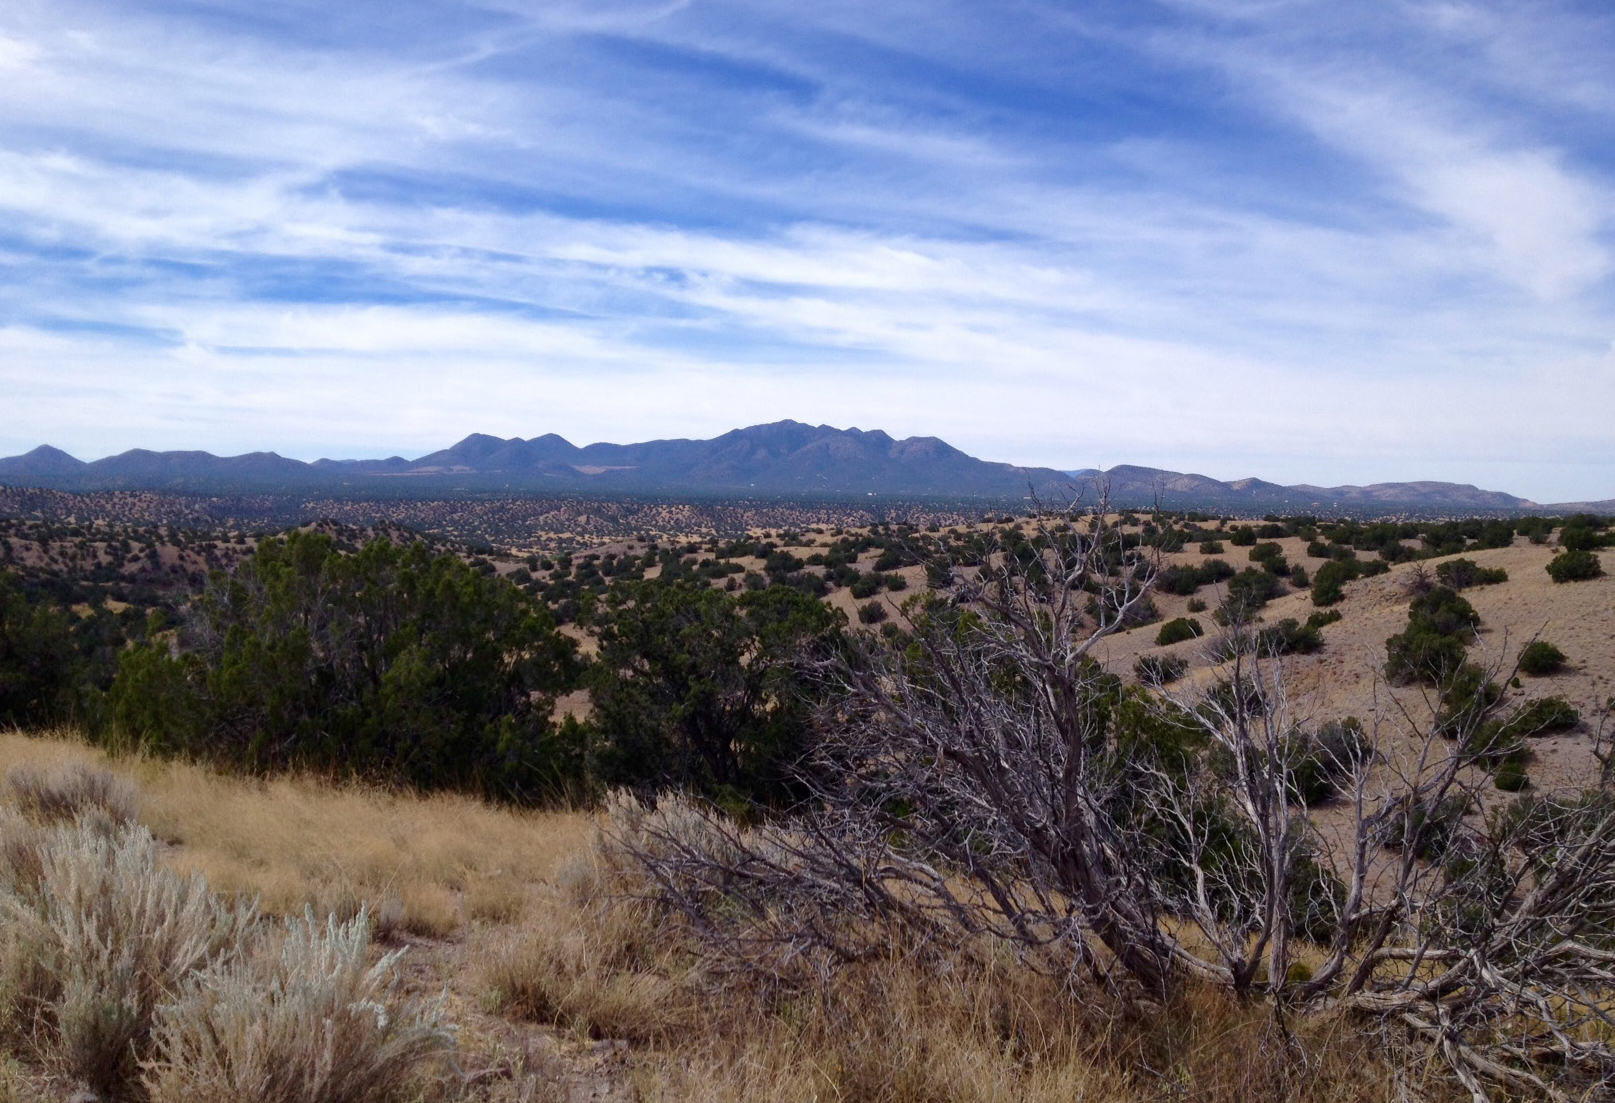 A dry mountain landscape